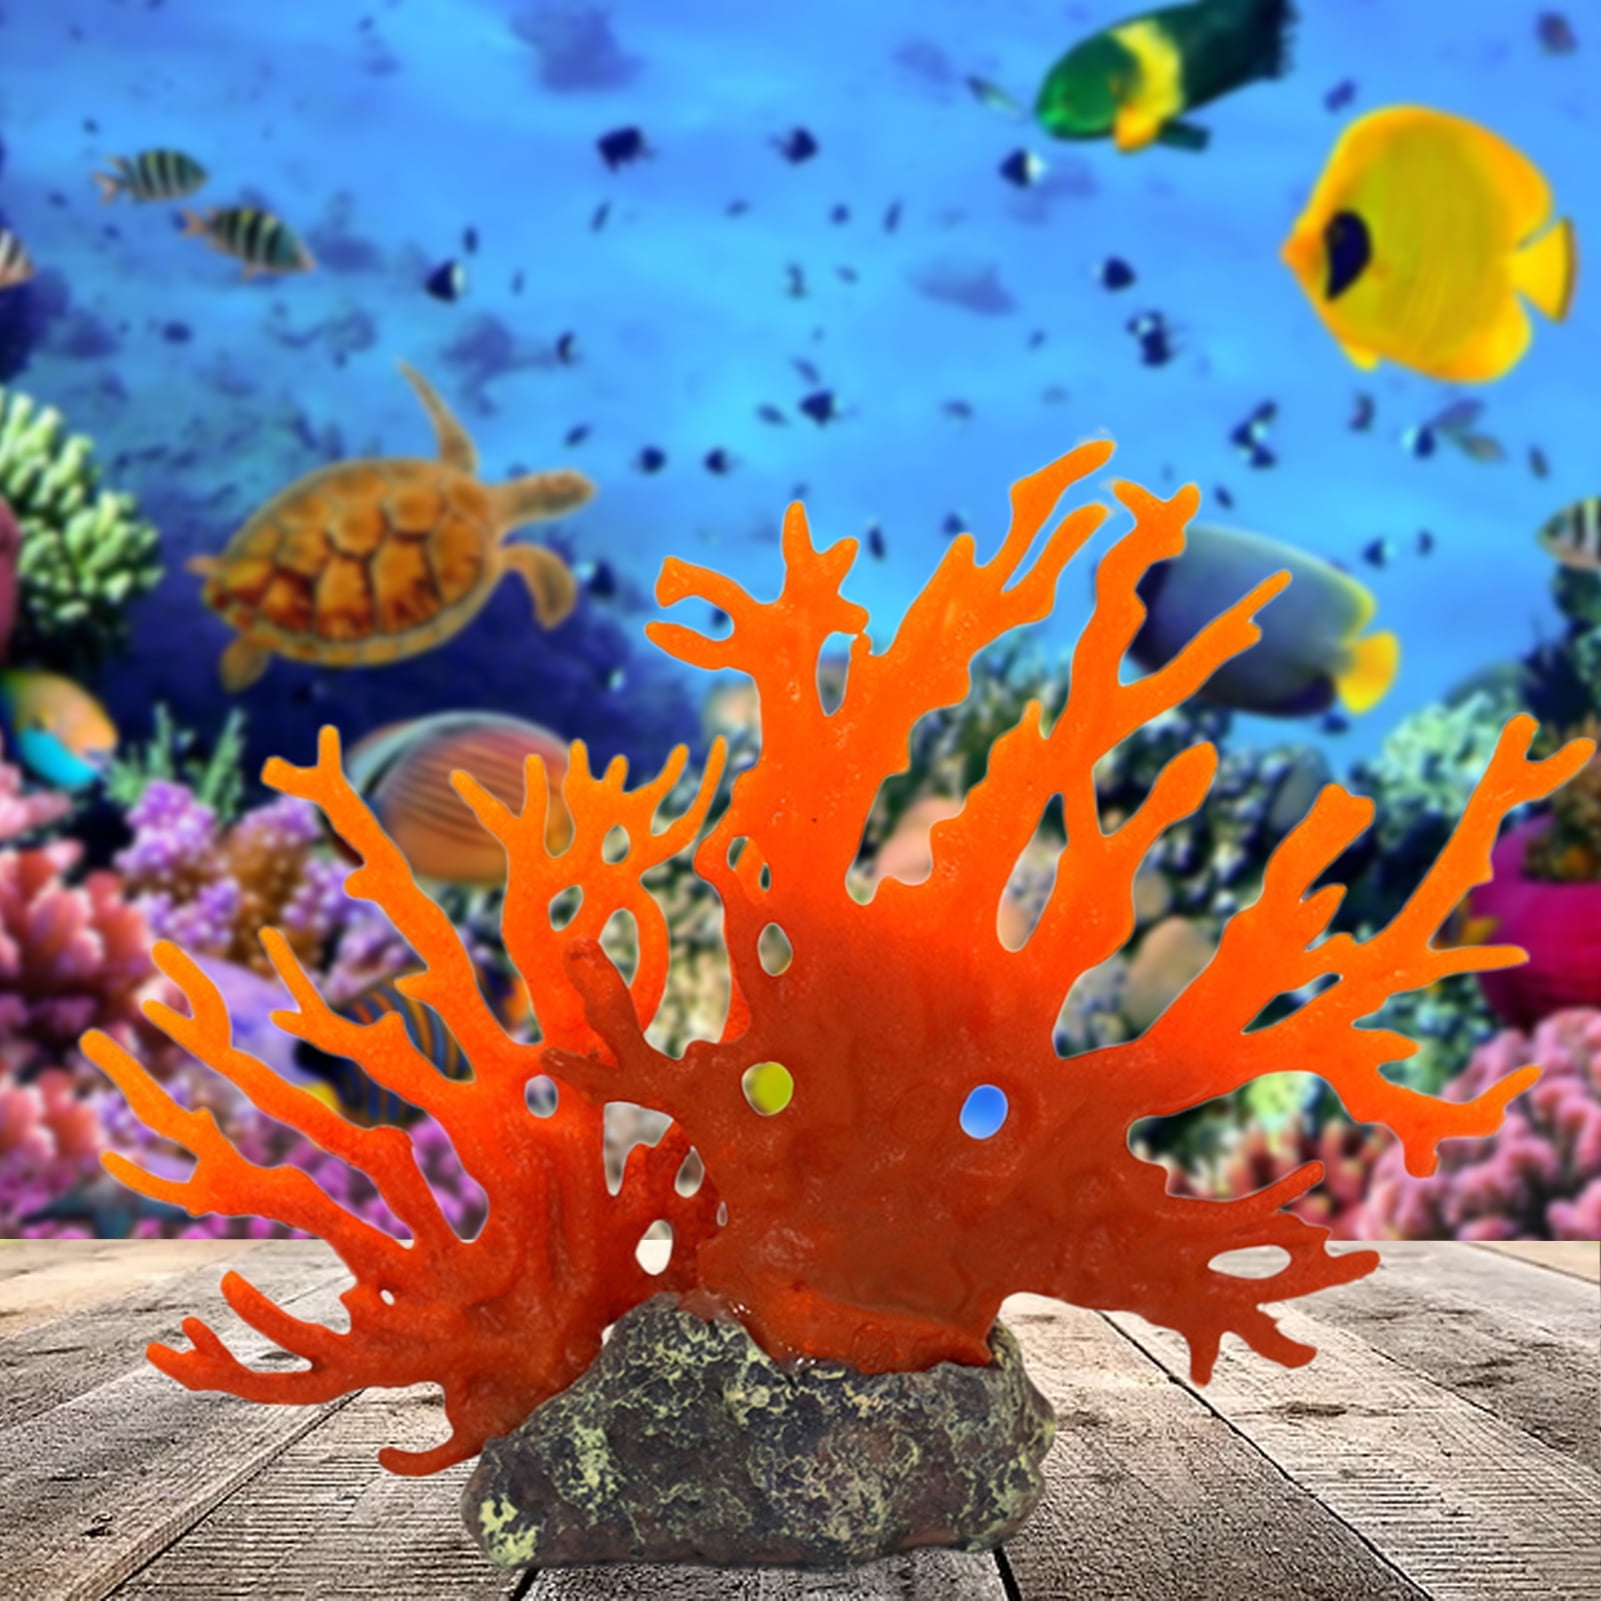 Resin Ornament Fish Tank Decoration Underwater Aquarium Artificial Coral New Pet 